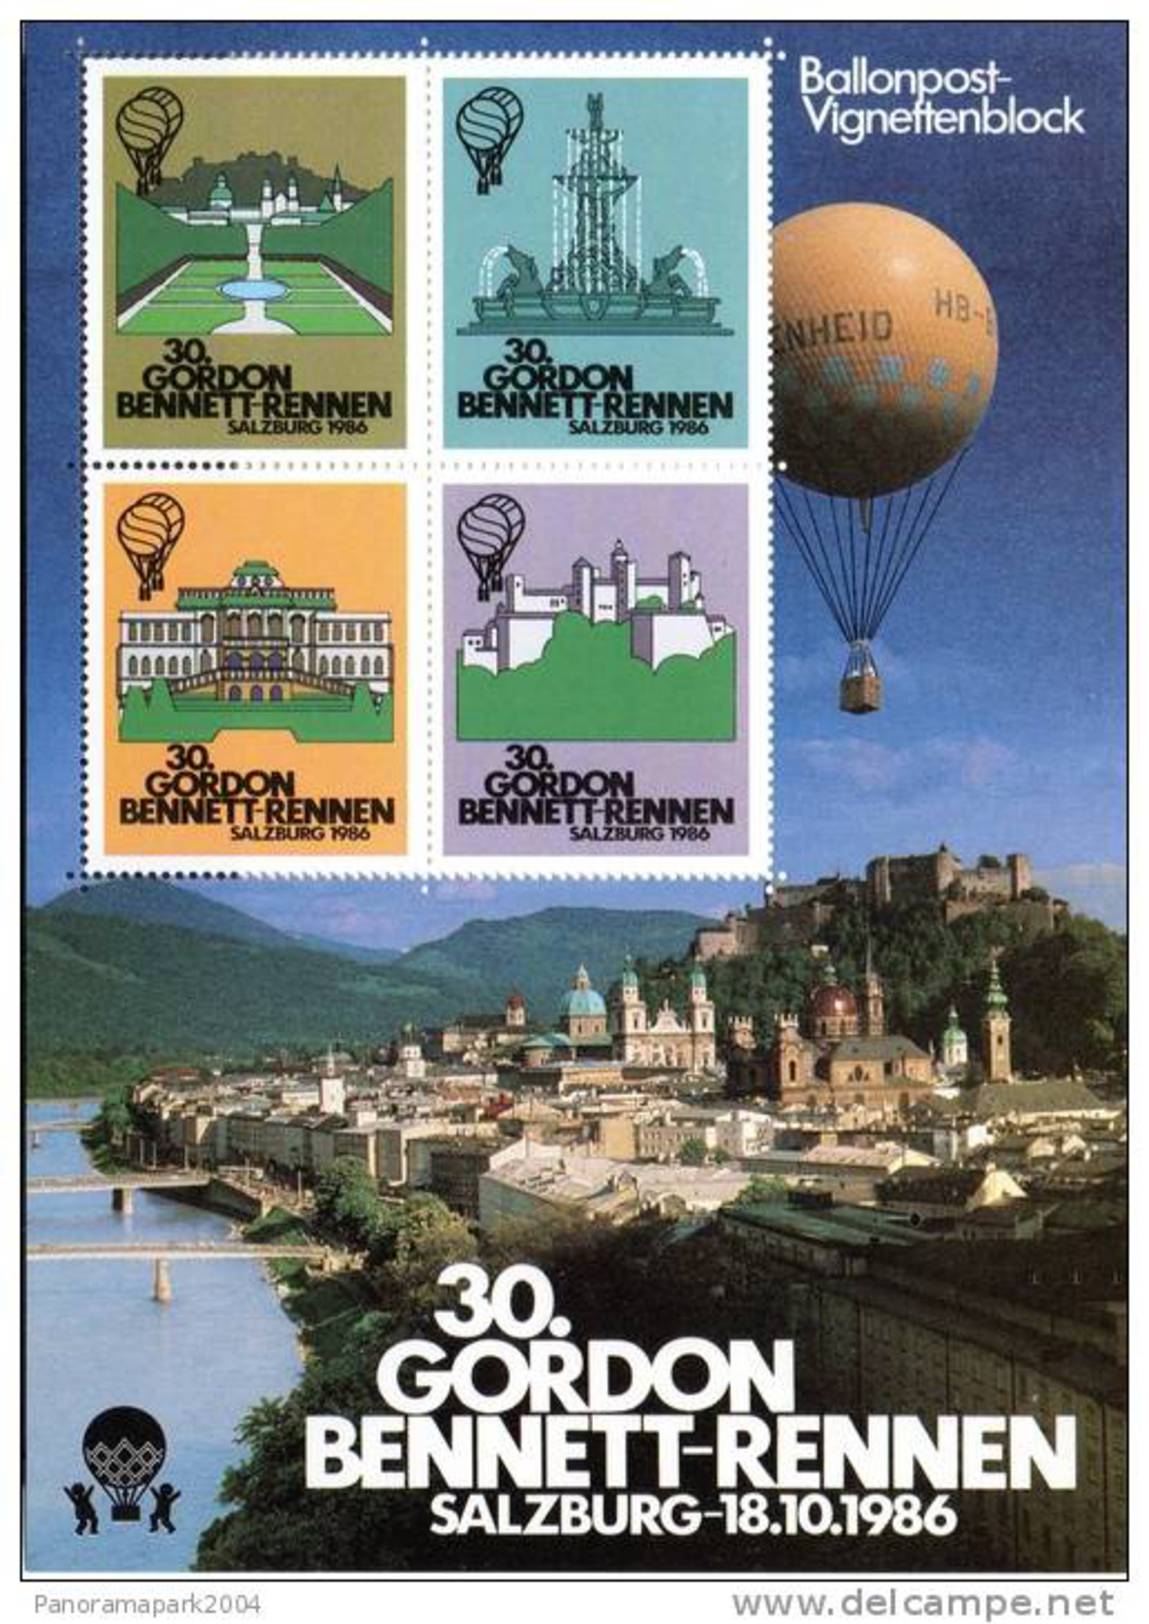 30. Gordon Bennett Rennen Salzburg 18.10.1986 Österreich Vignettenblock Ballonpost Heißluftballon - Par Ballon